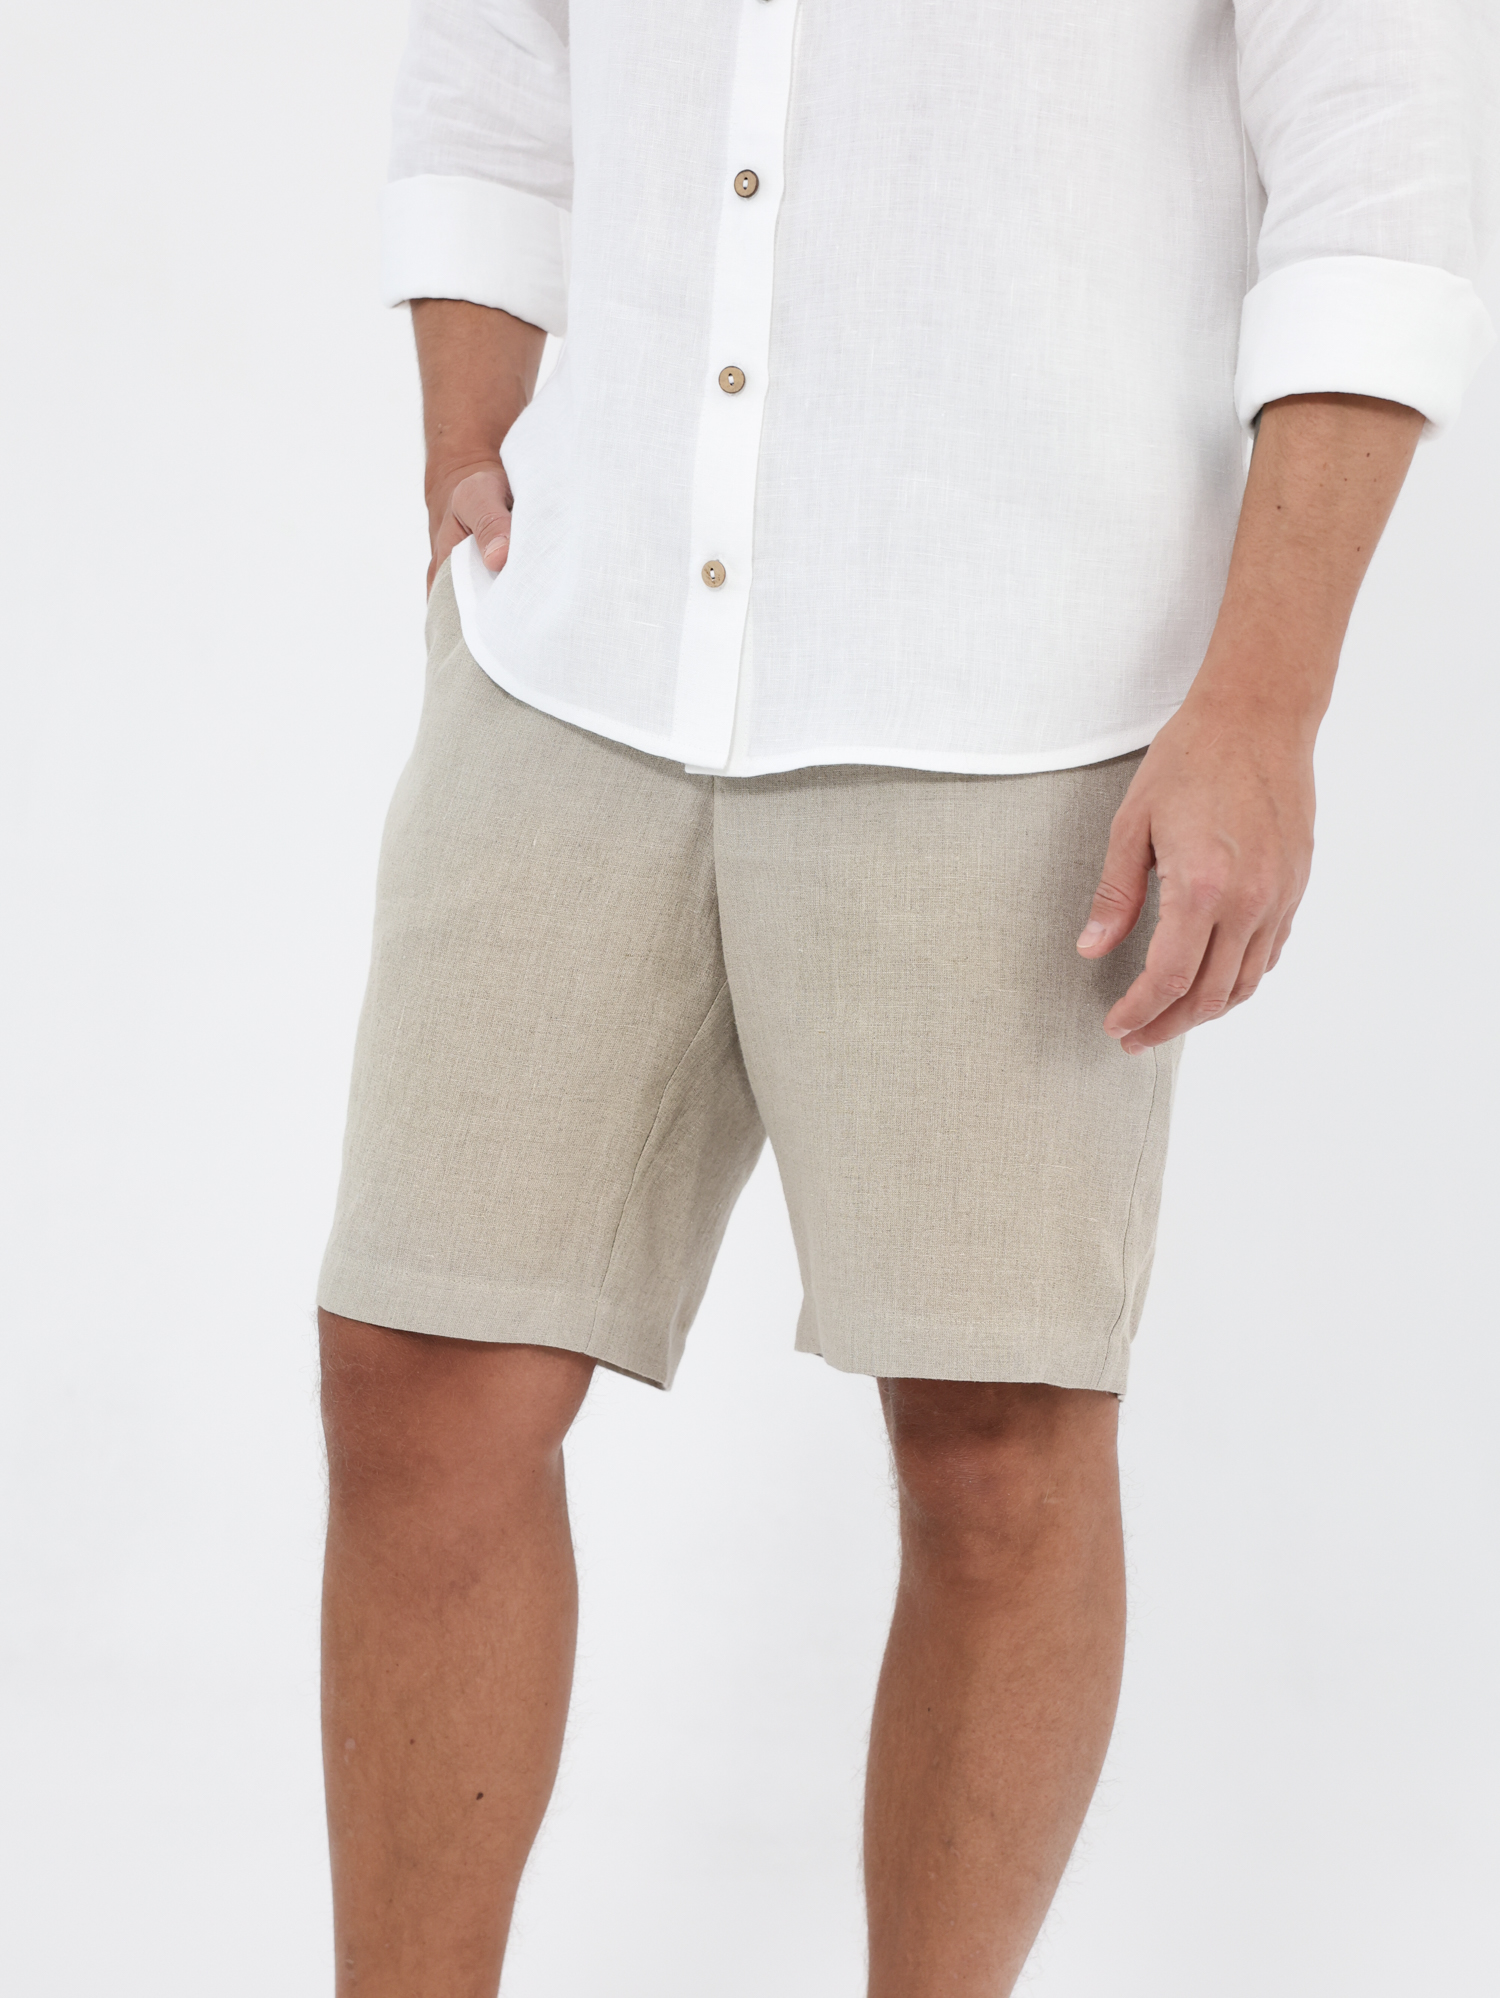 Men's linen shorts